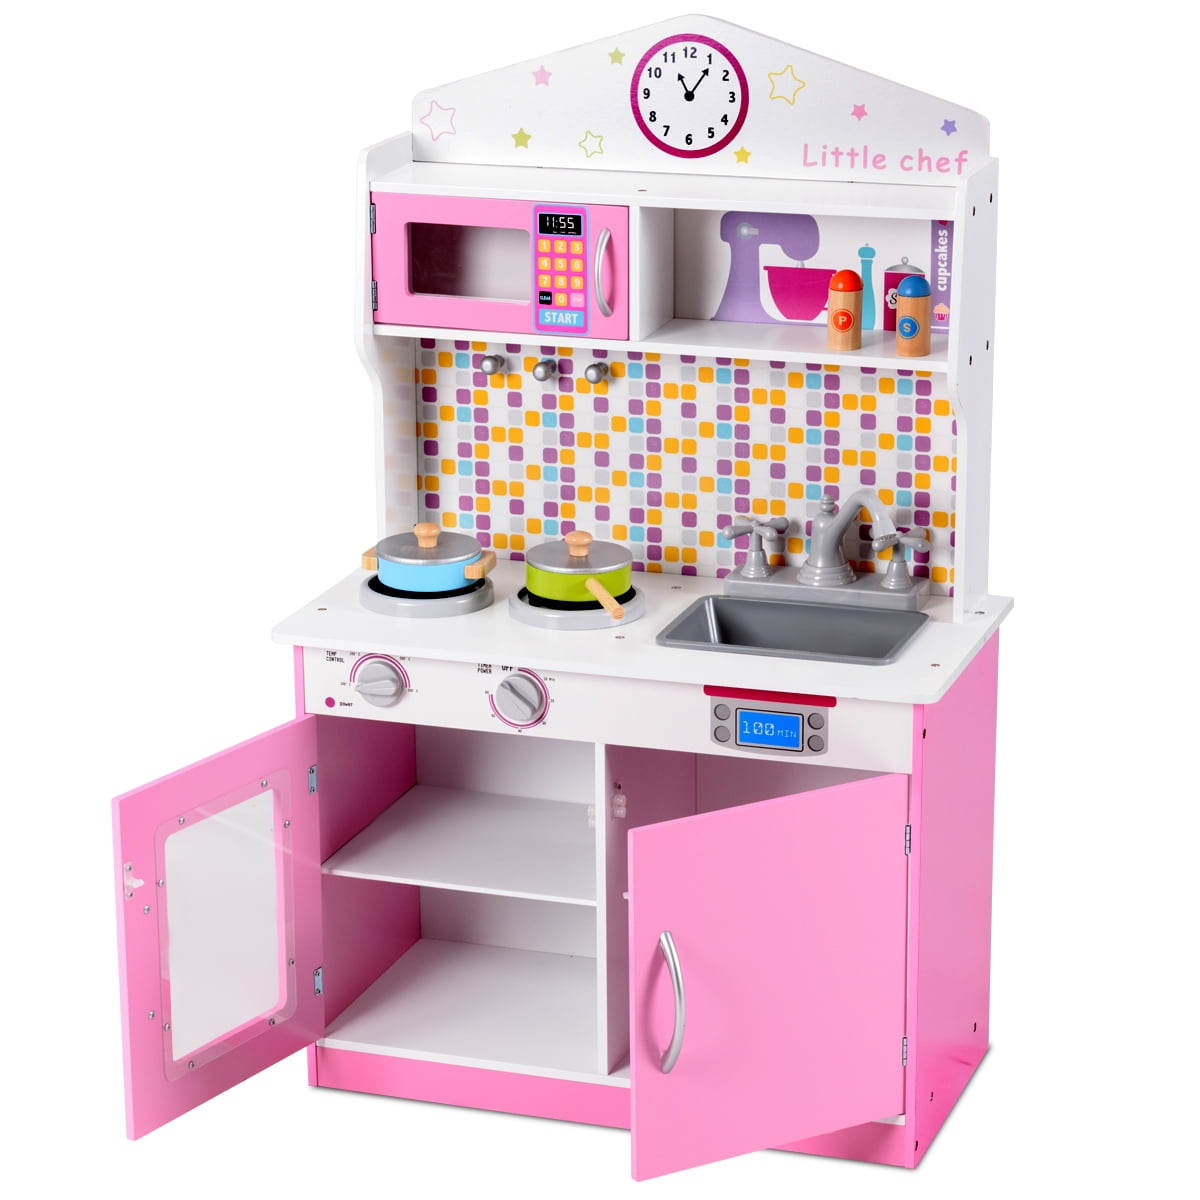 Kid Plastic Play Set Kitchen Toy Kitchenware Pretend Cooking Playset Toddler Toy 